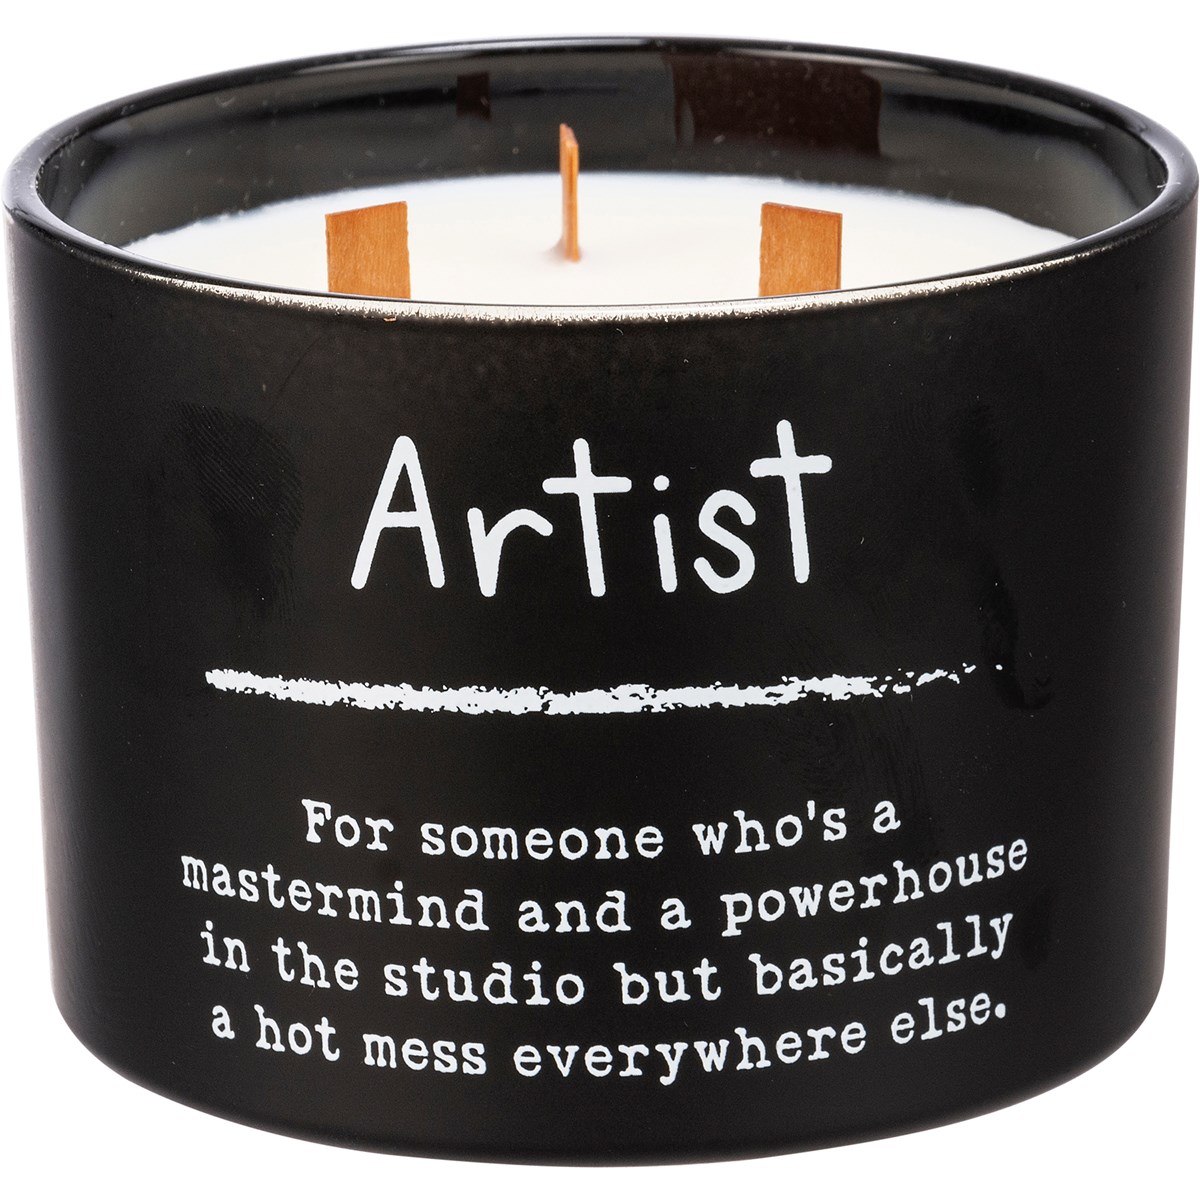 Artist Jar Candle - Soy Wax, Glass, Wood